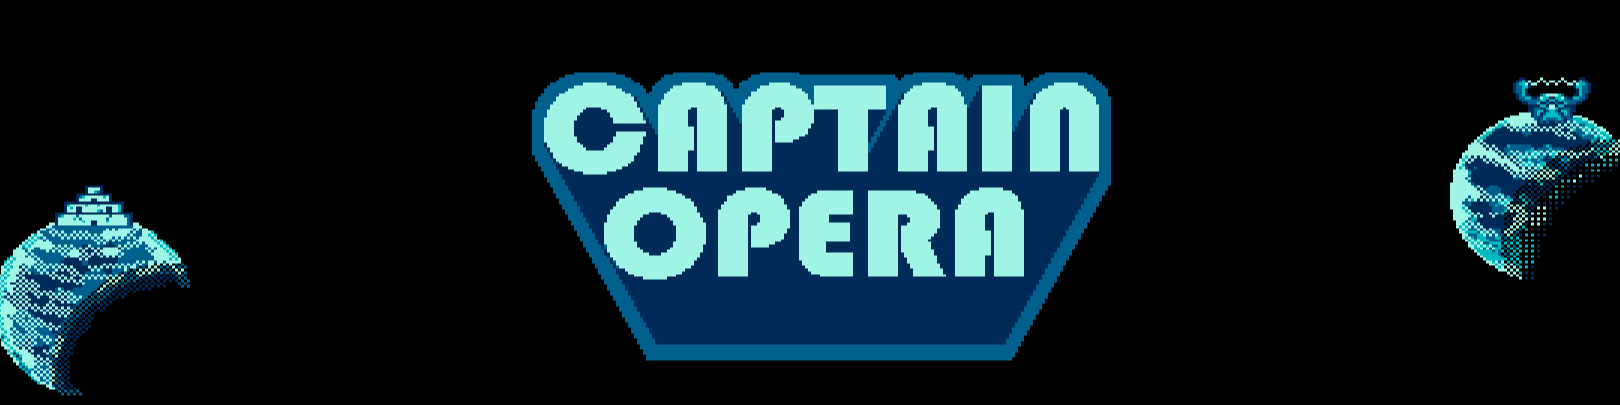 Captain Opera